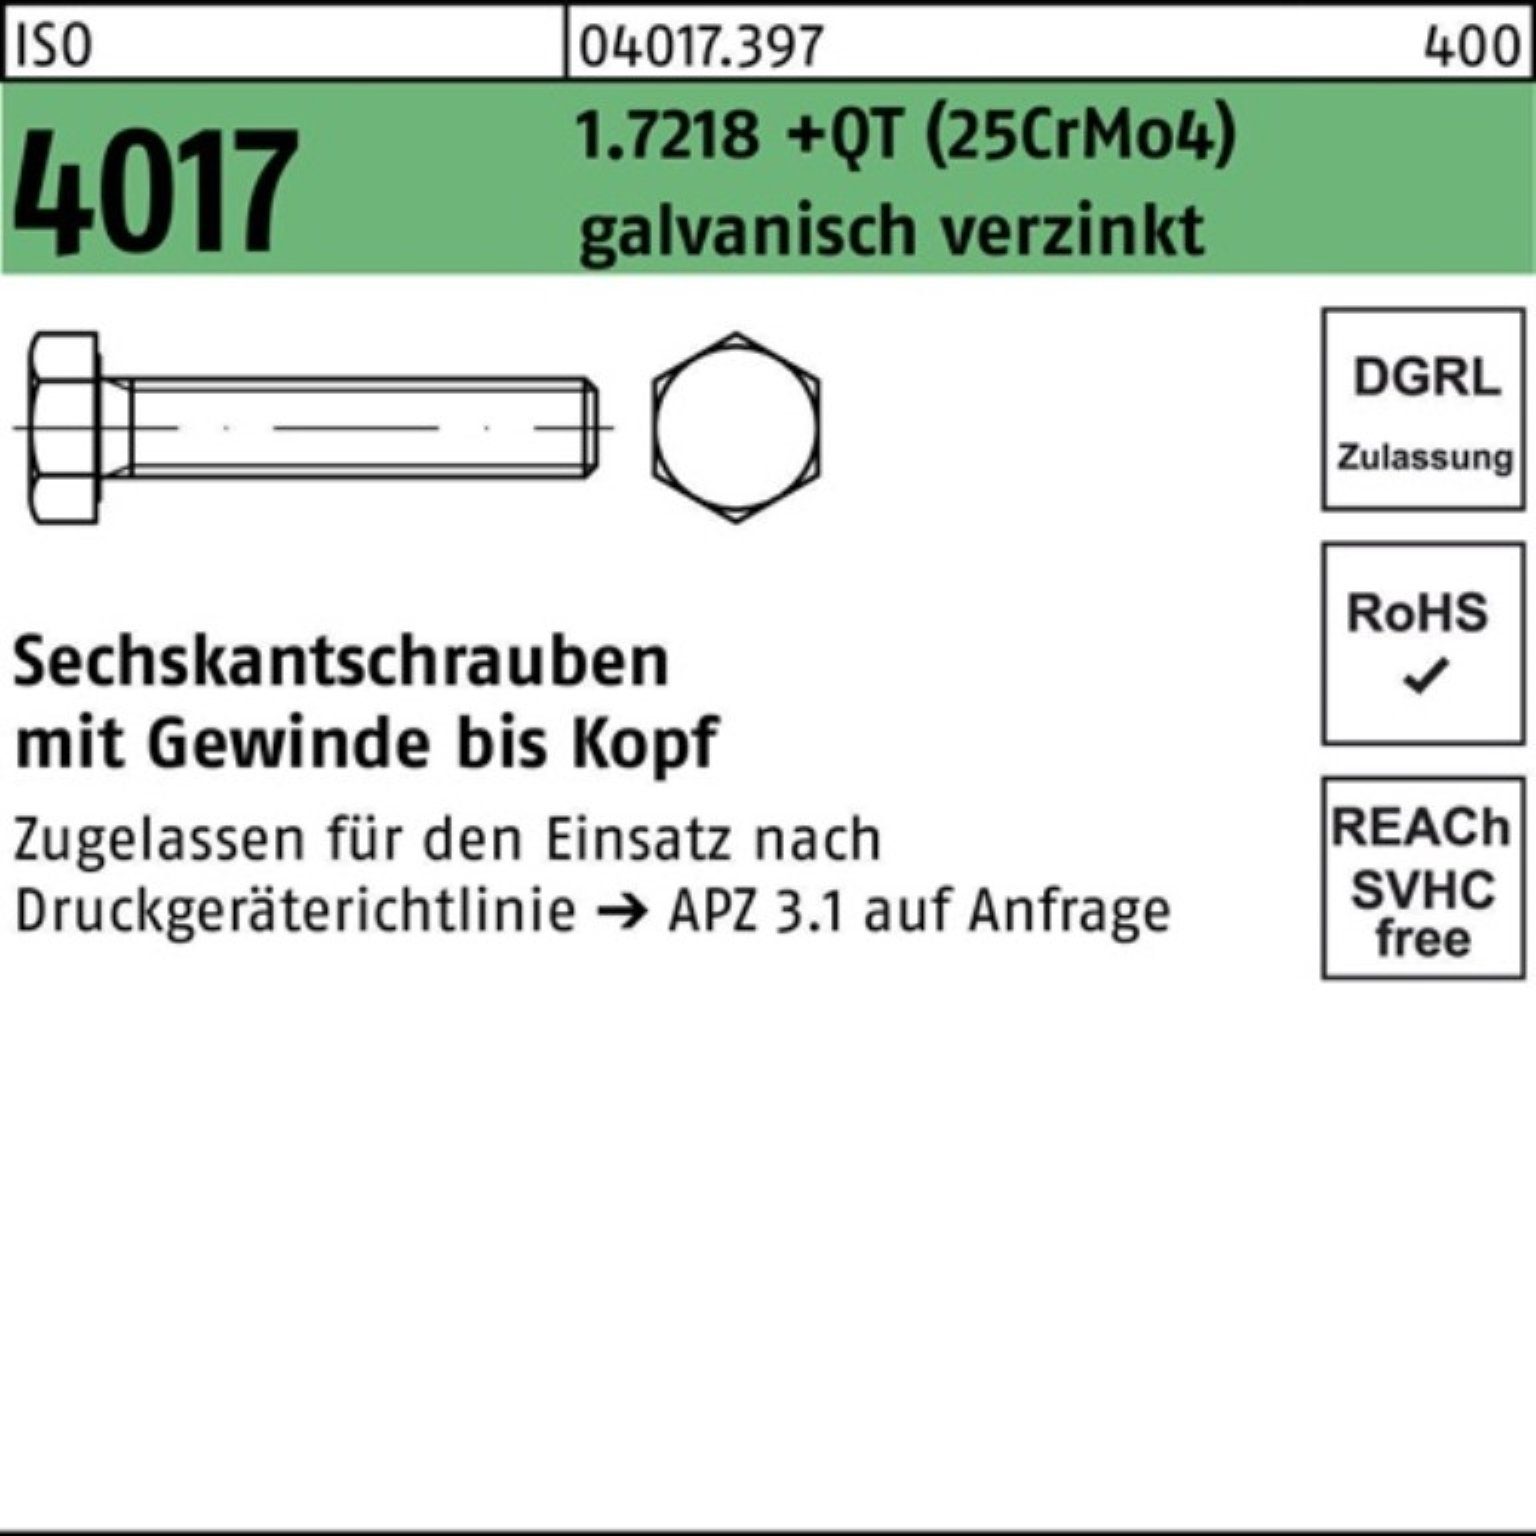 Bufab Sechskantschraube 100er Pack Sechskantschraube (25CrMo4) VG ISO 4017 1.7218 +QT M24x180